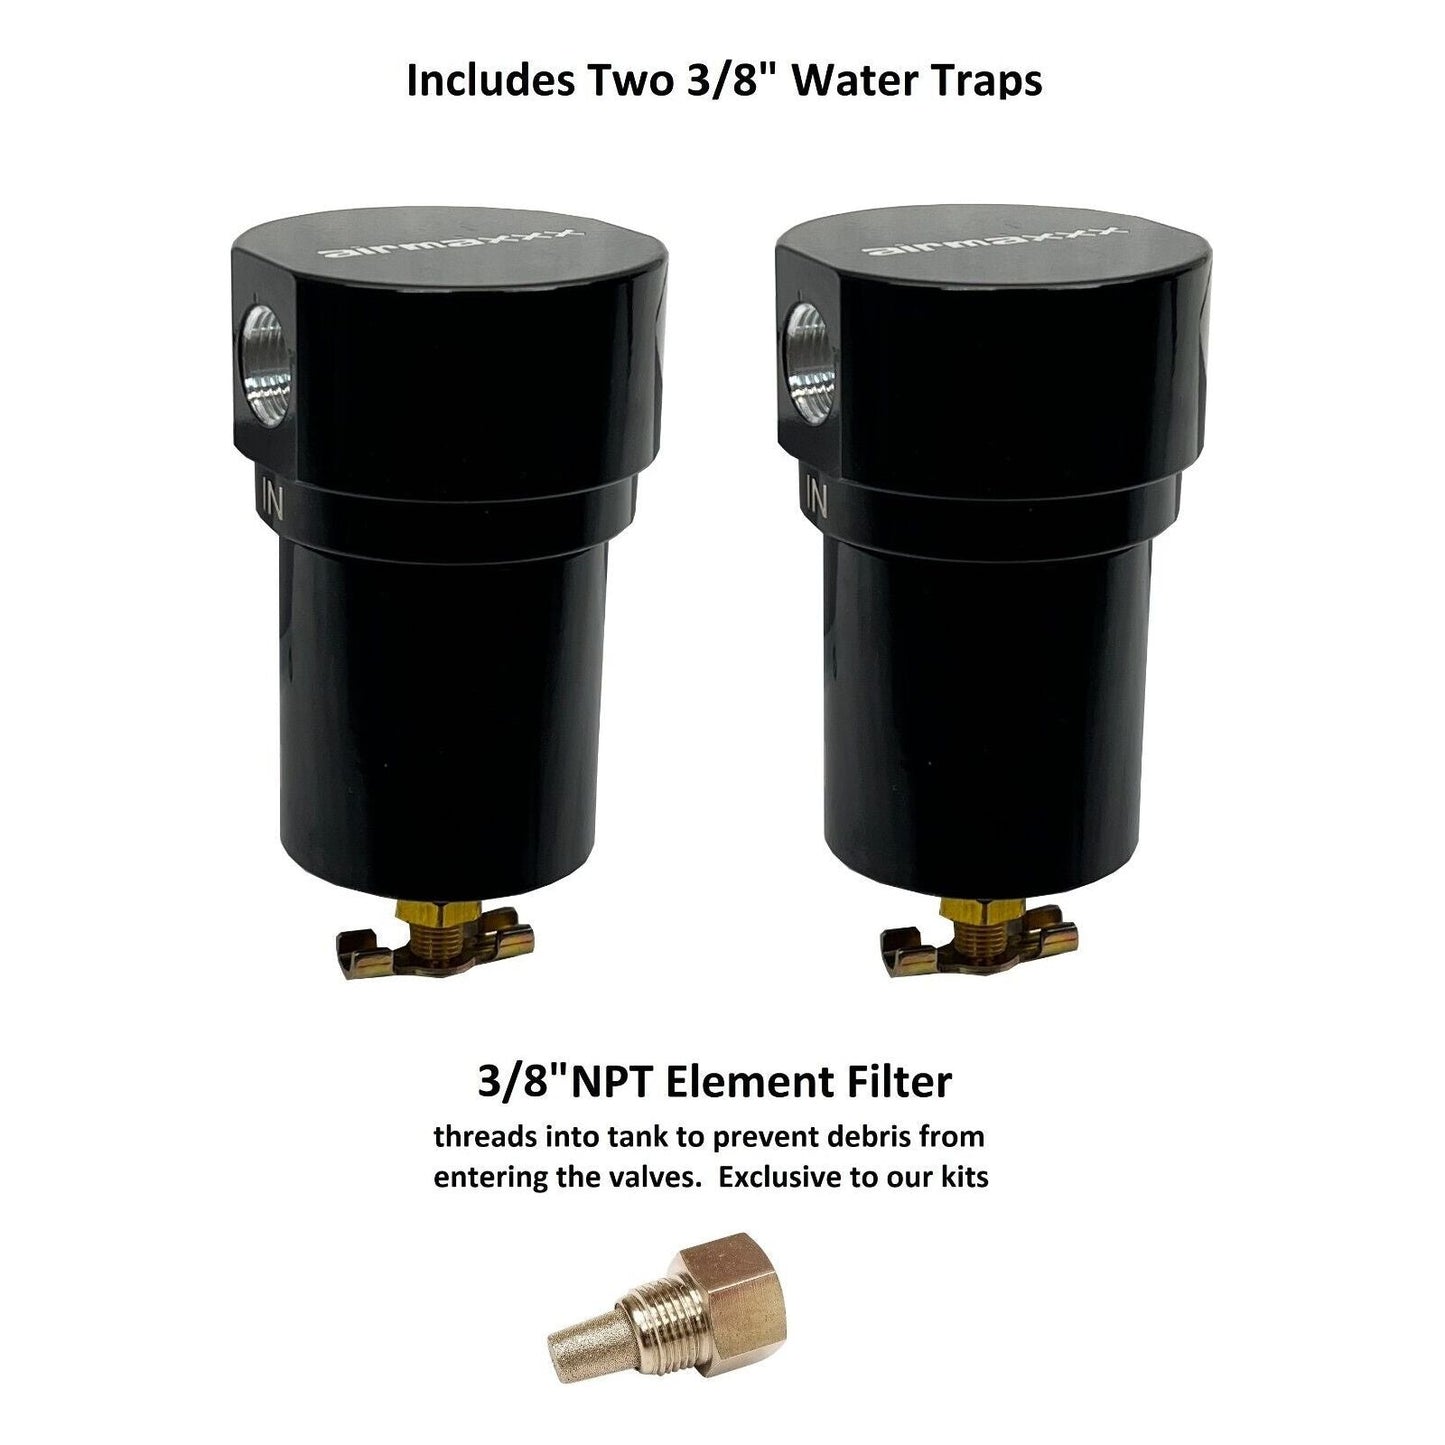 water traps & npt element filter